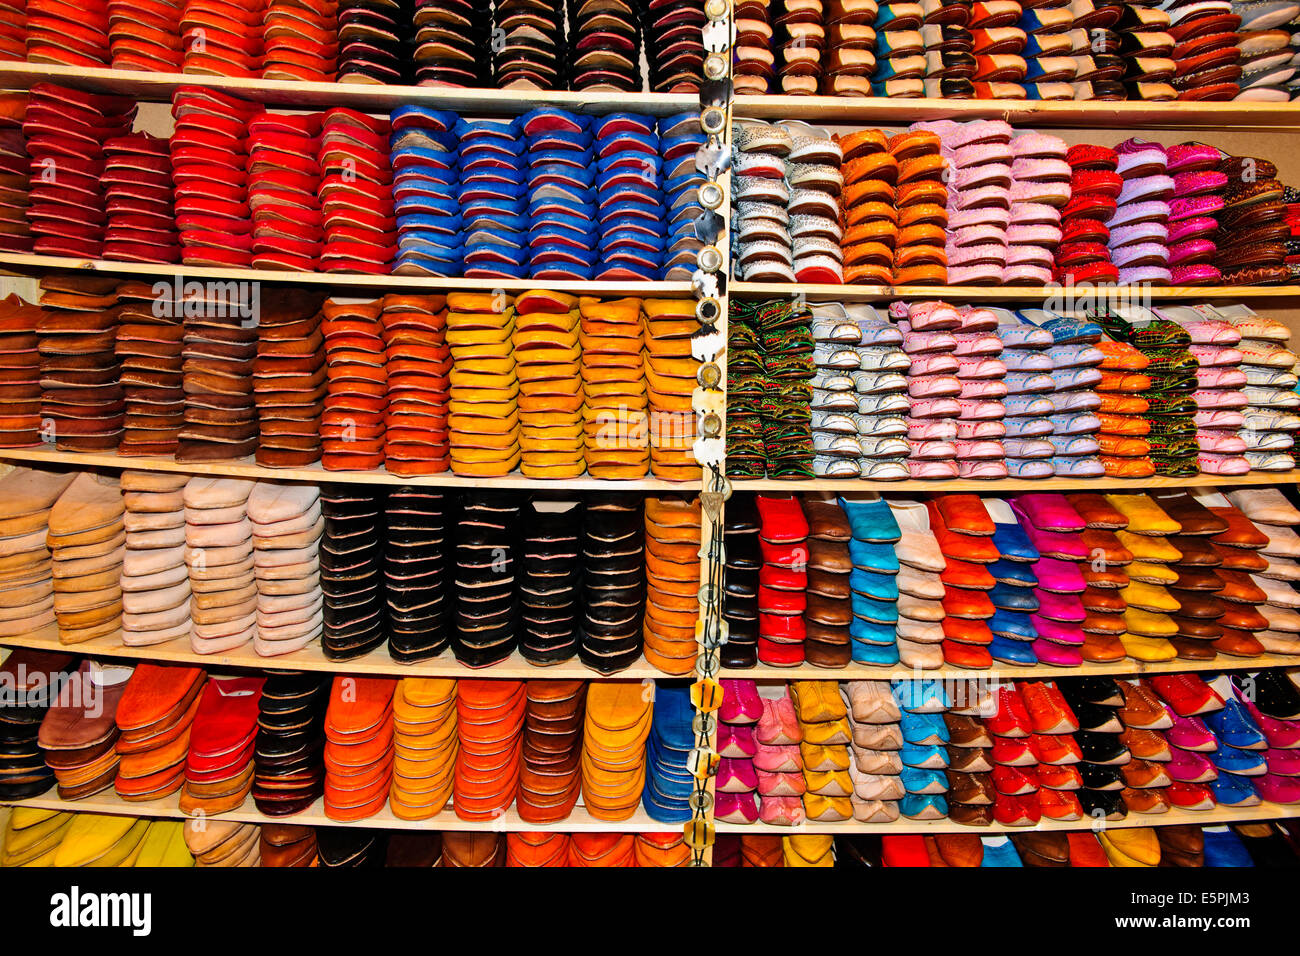 Fes, Leather District, sterben Gruben, Skins, Läden, die alle Arten von Lederwaren, Gerberei Chaouwara, Medina, Souk, Fes, Fez, Marokko Stockfoto